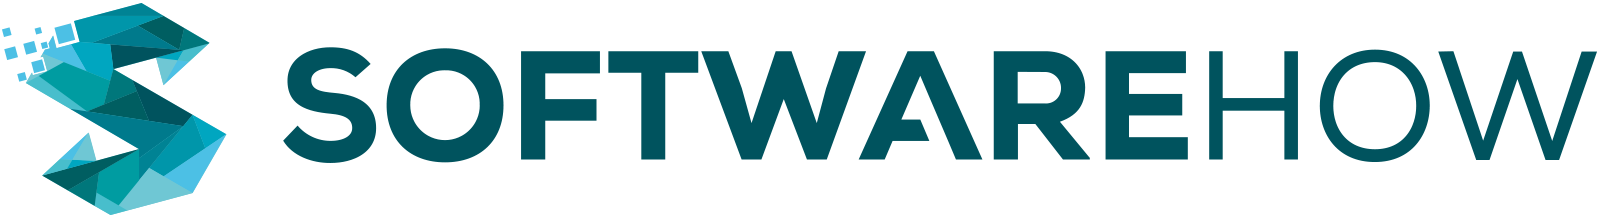 softwarehow logo